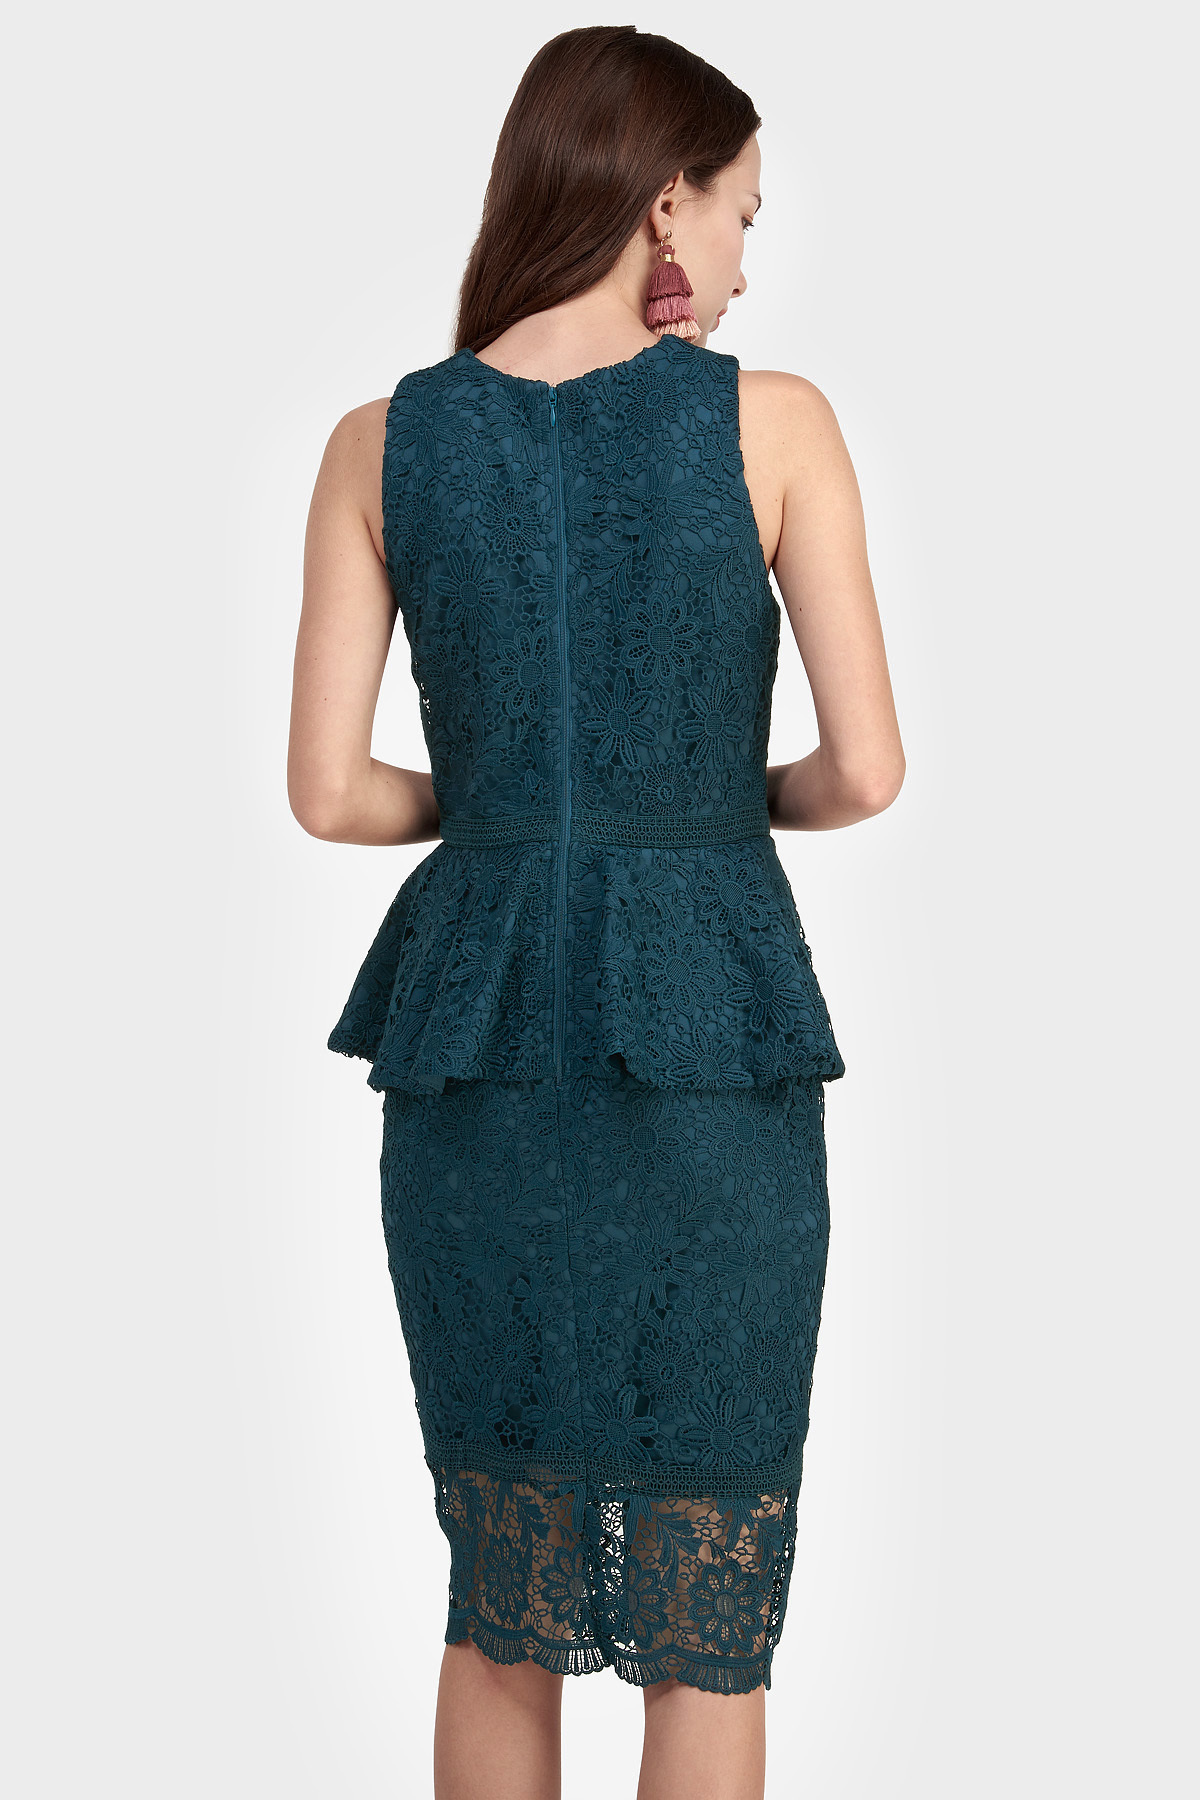 Fayth • Victoria Crochet Peplum Dress